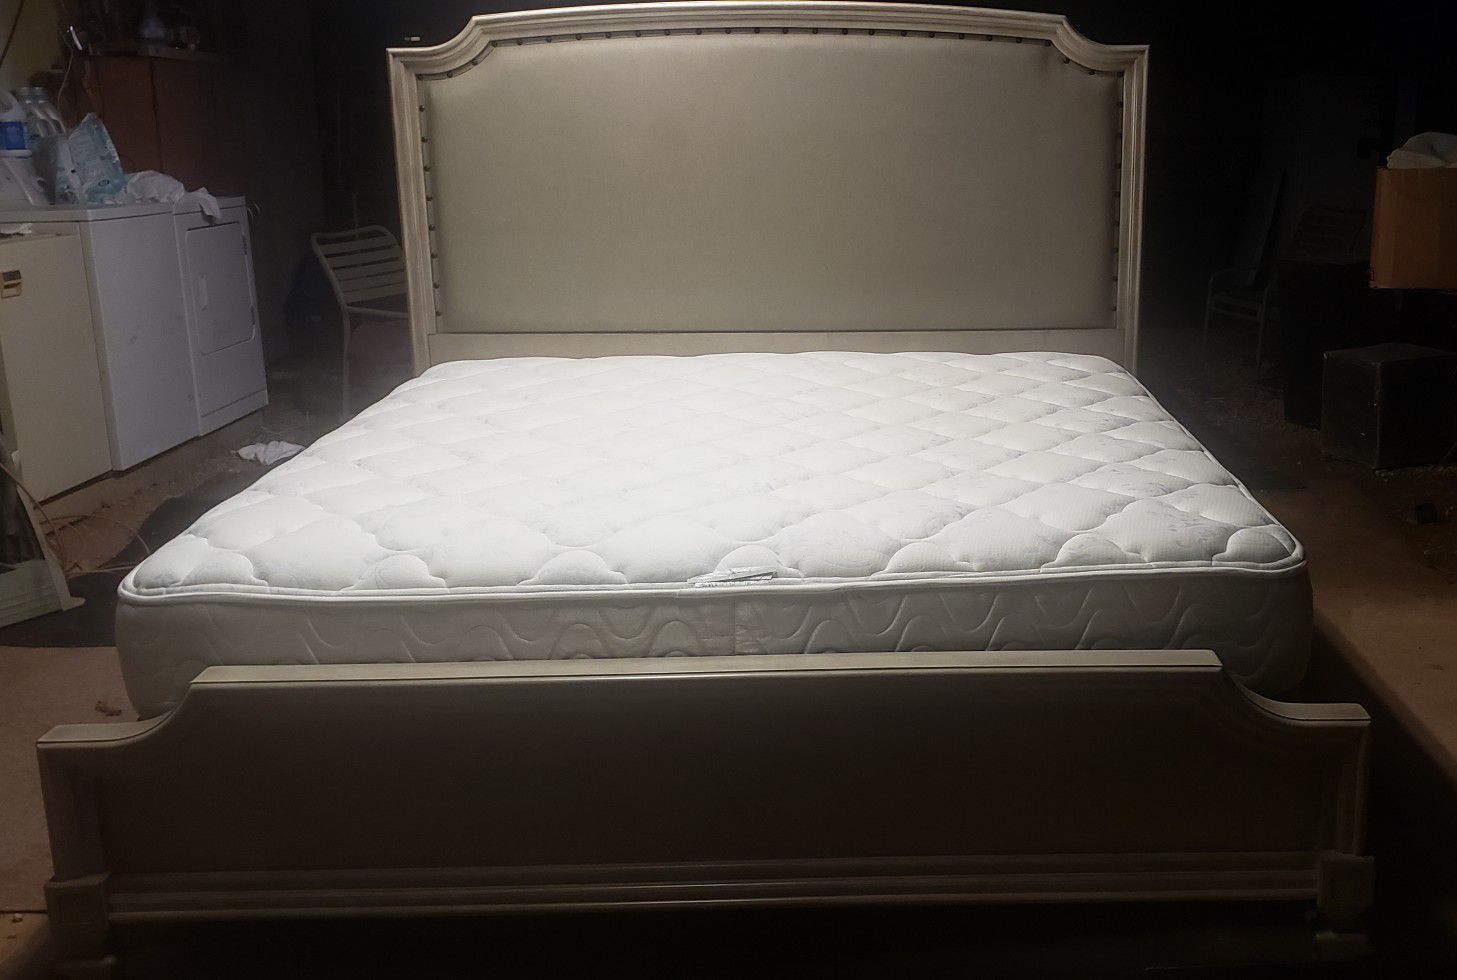 Ashley furniture king bed